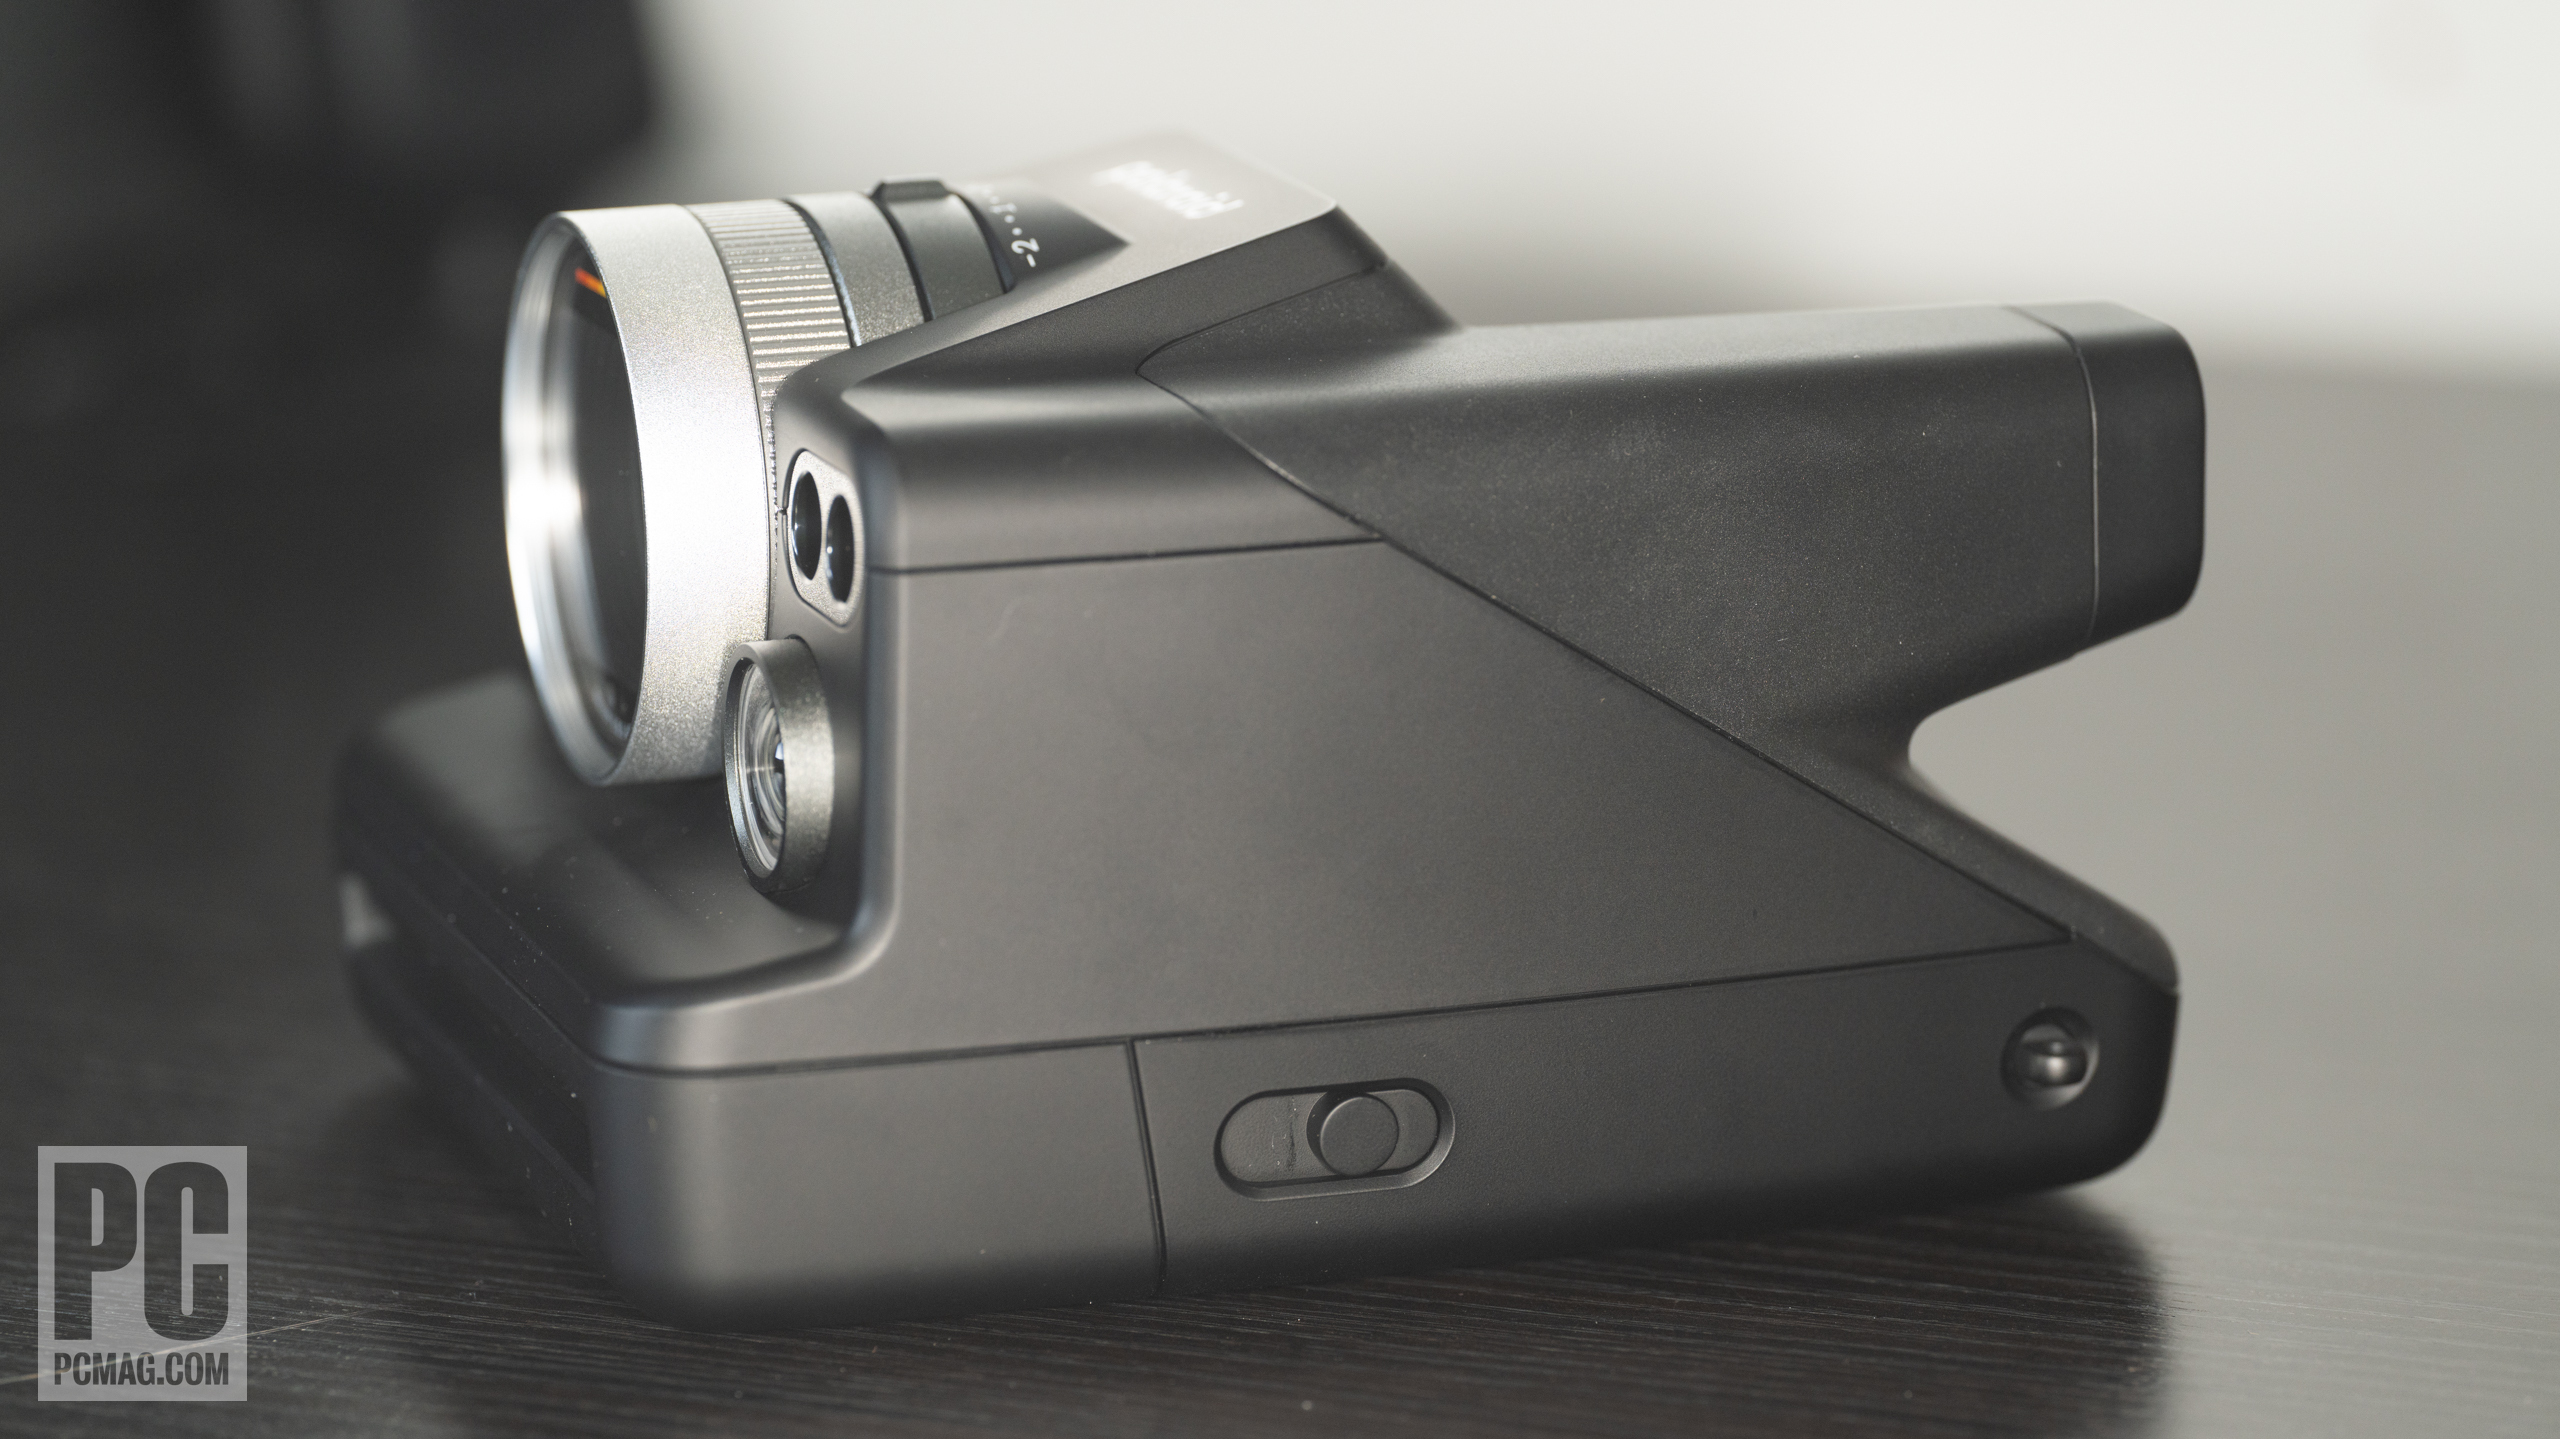 A Polaroid Instant Camera on a desk